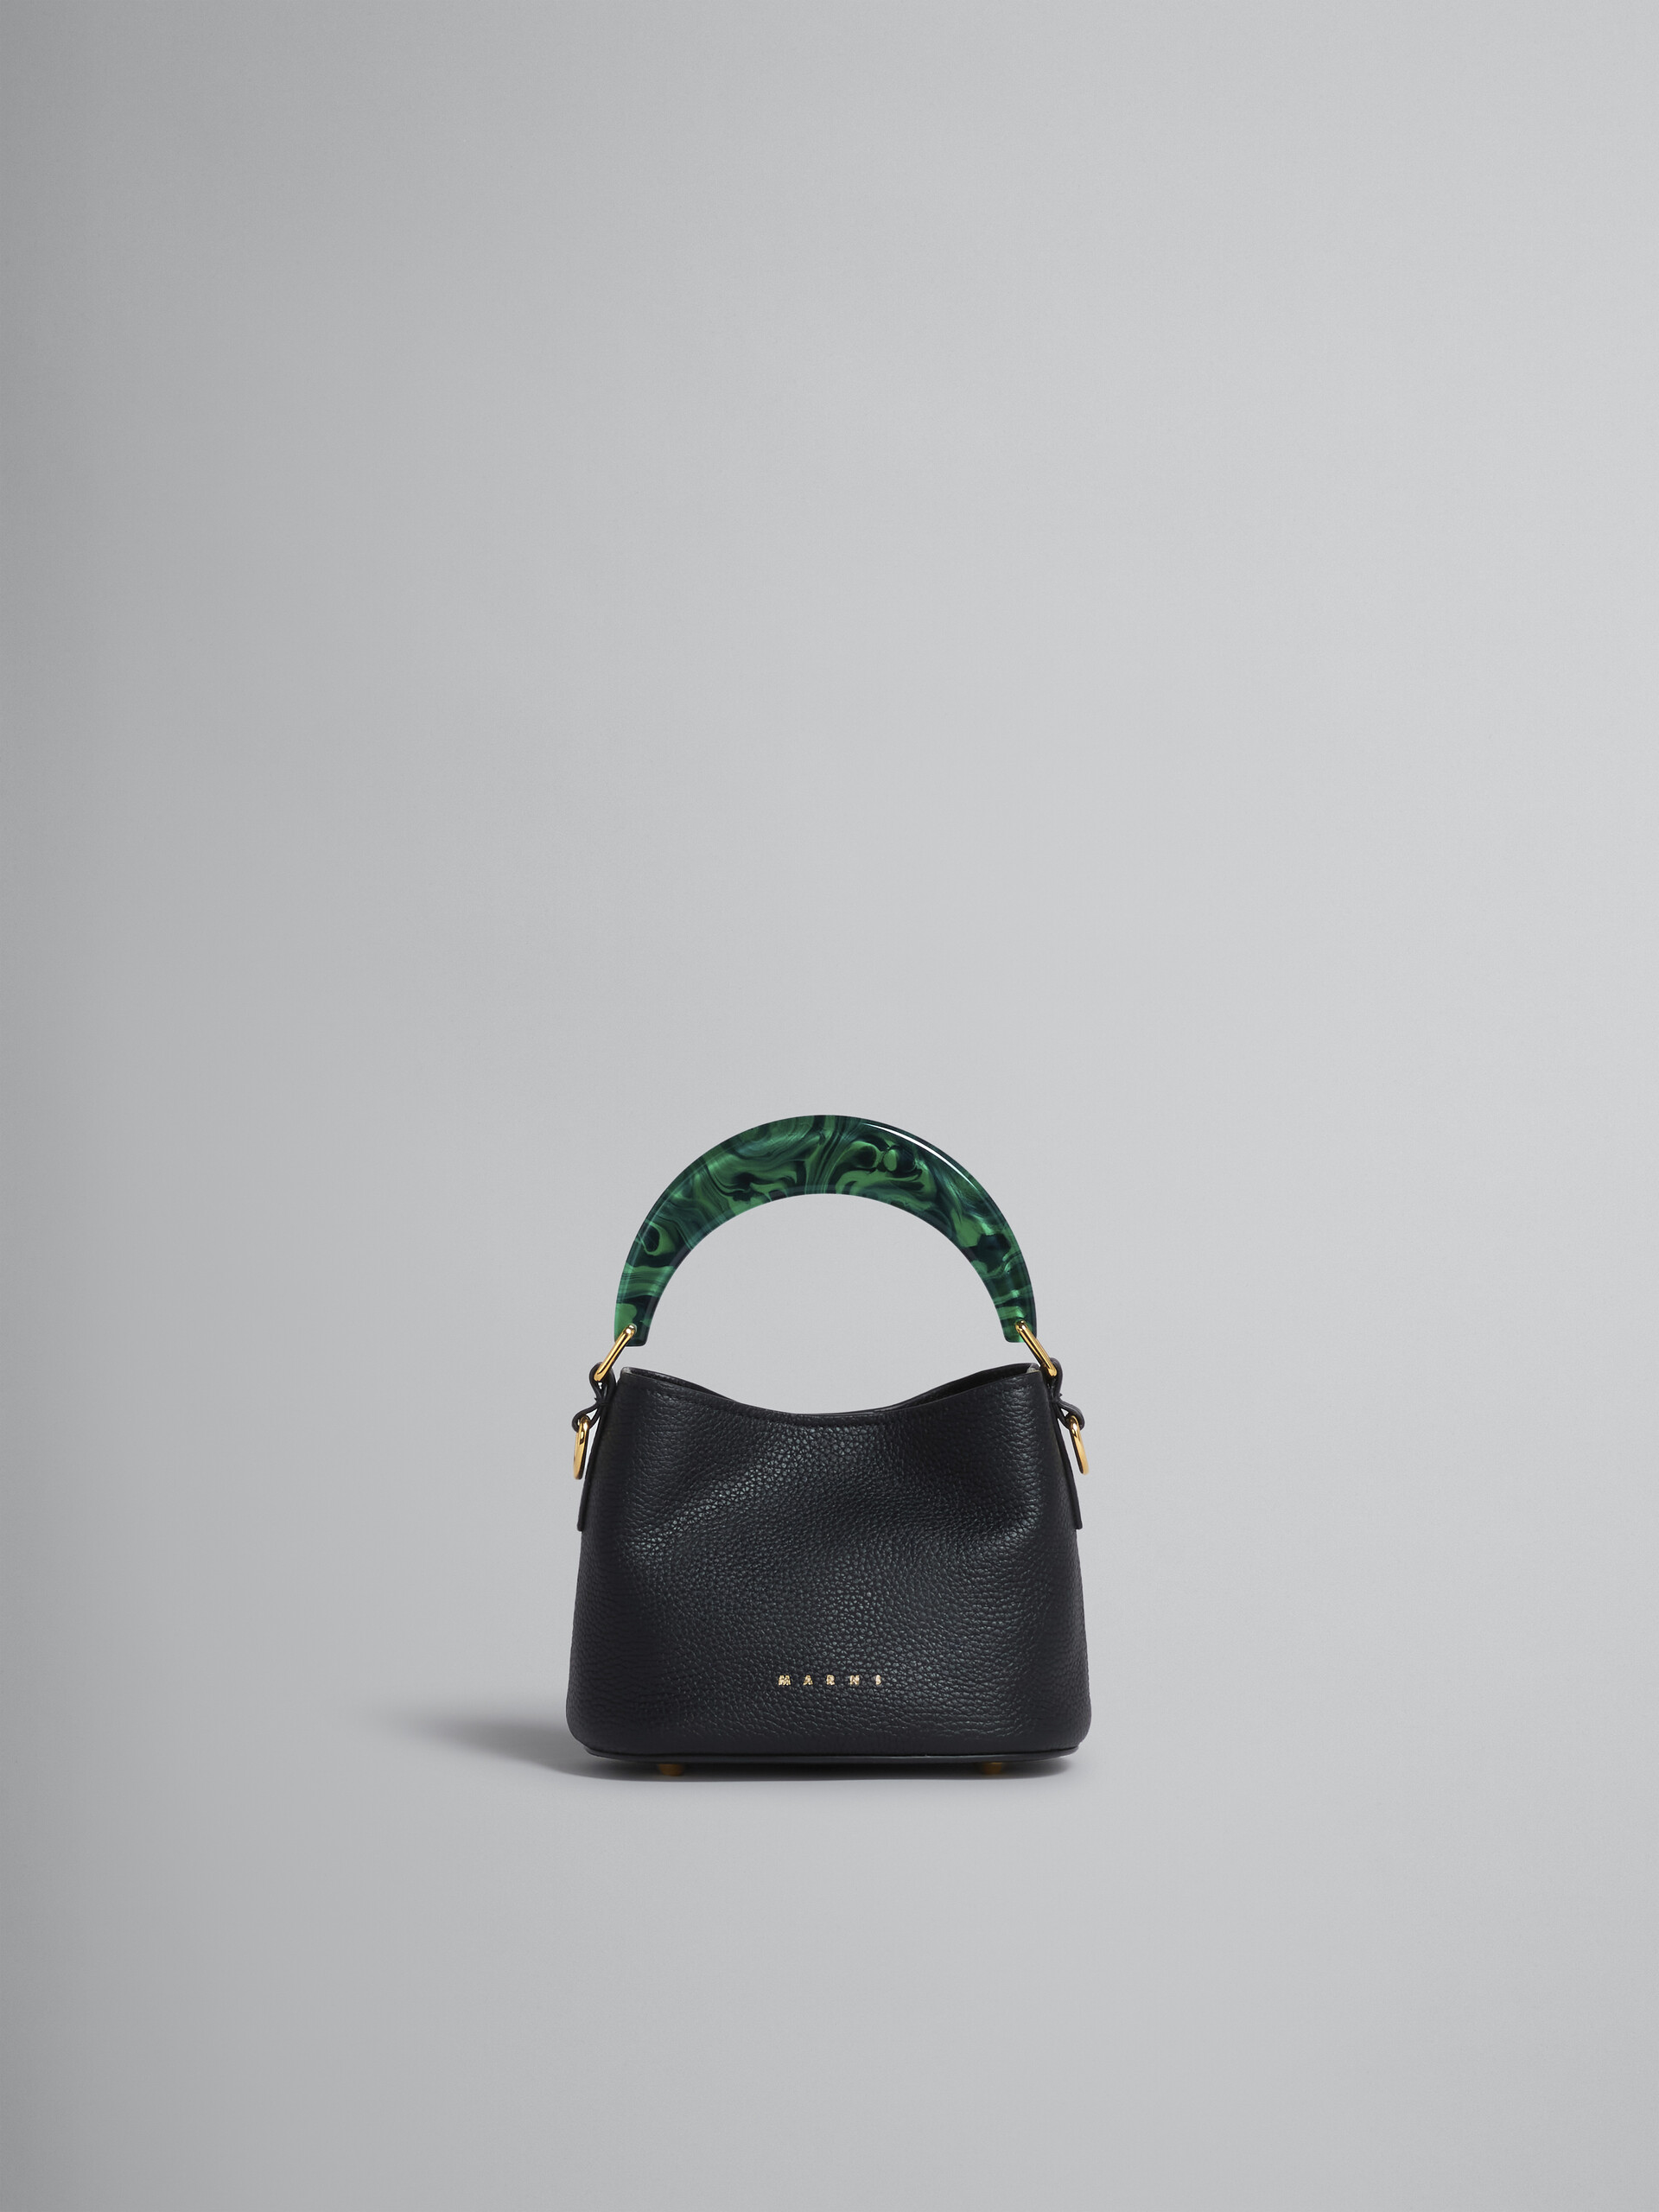 Venice Mini Bucket Bag in black leather - Shoulder Bags - Image 1